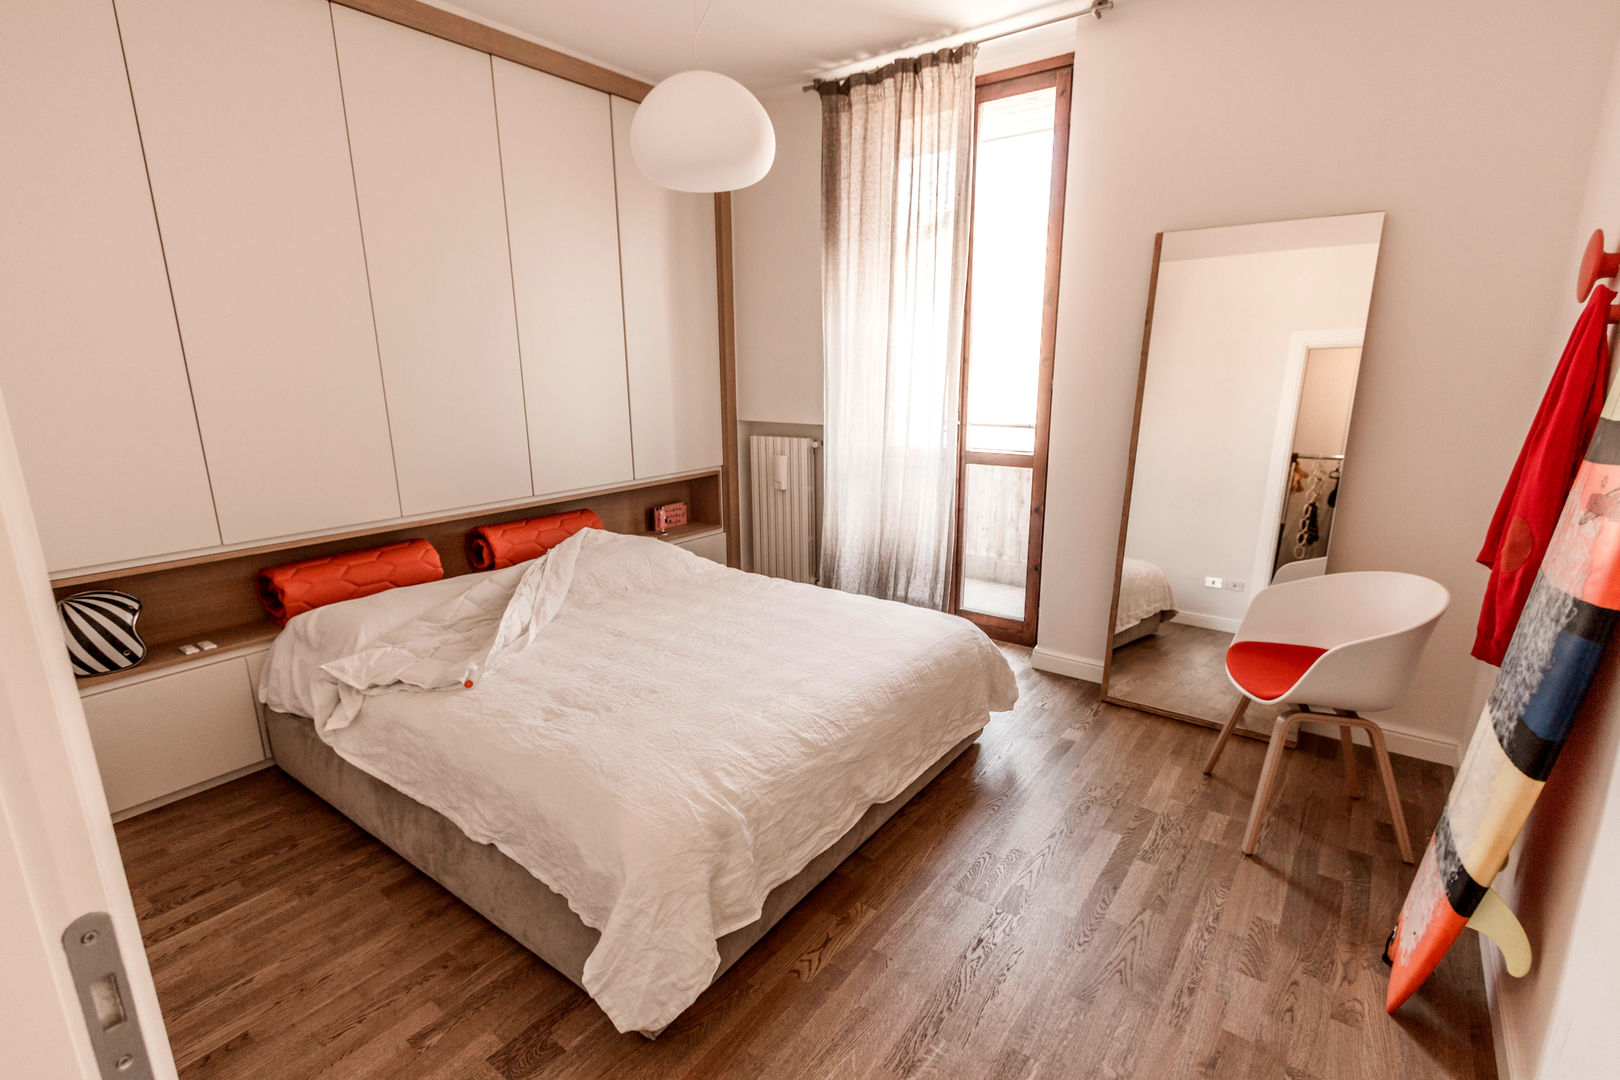 Appartamento Residenziale - Brianza 2014, Galleria del Vento Galleria del Vento Camera da letto in stile scandinavo